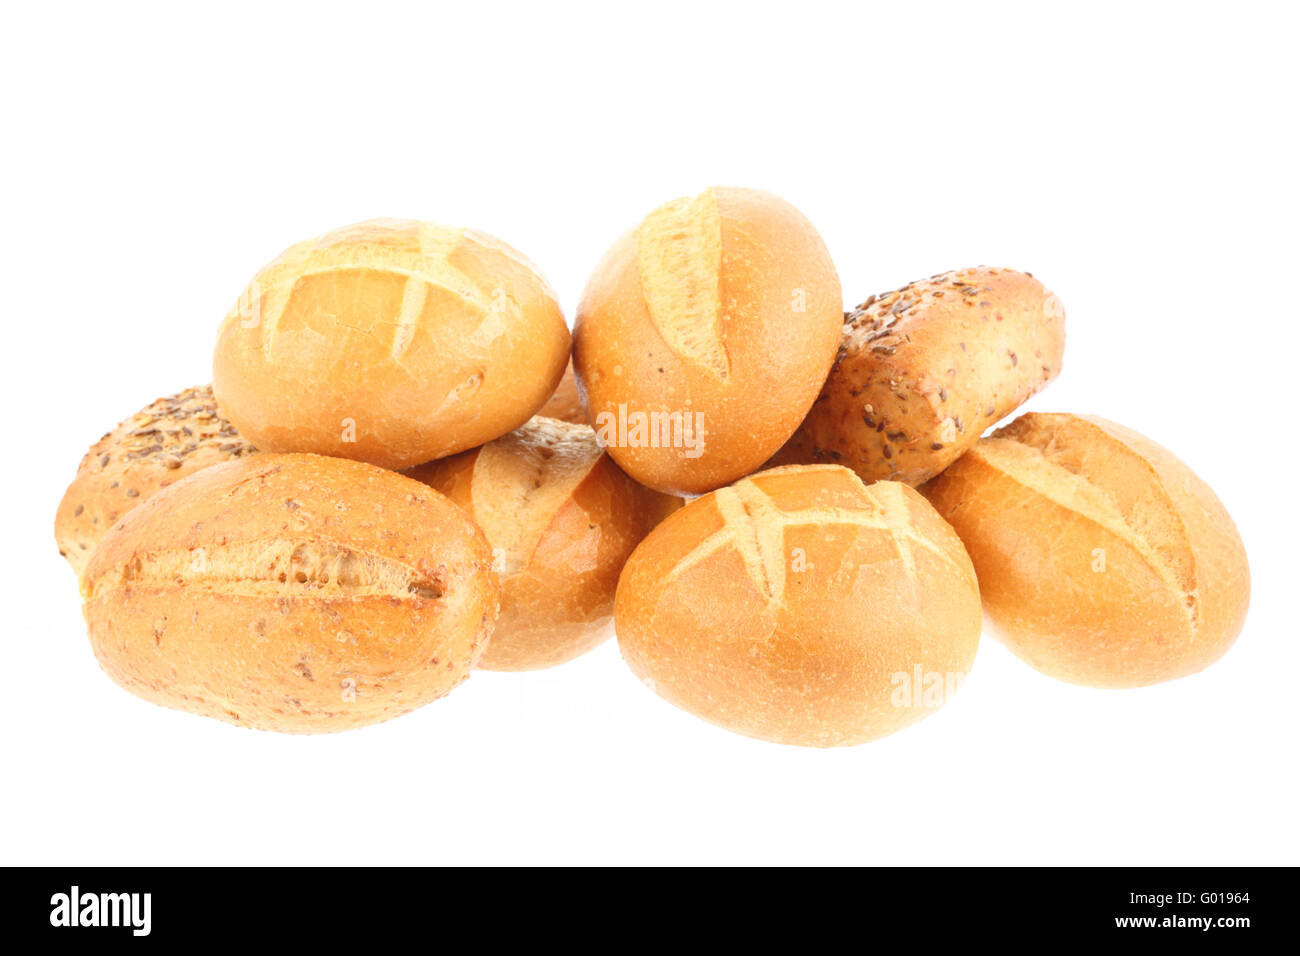 Bread rolls. Stock Photo